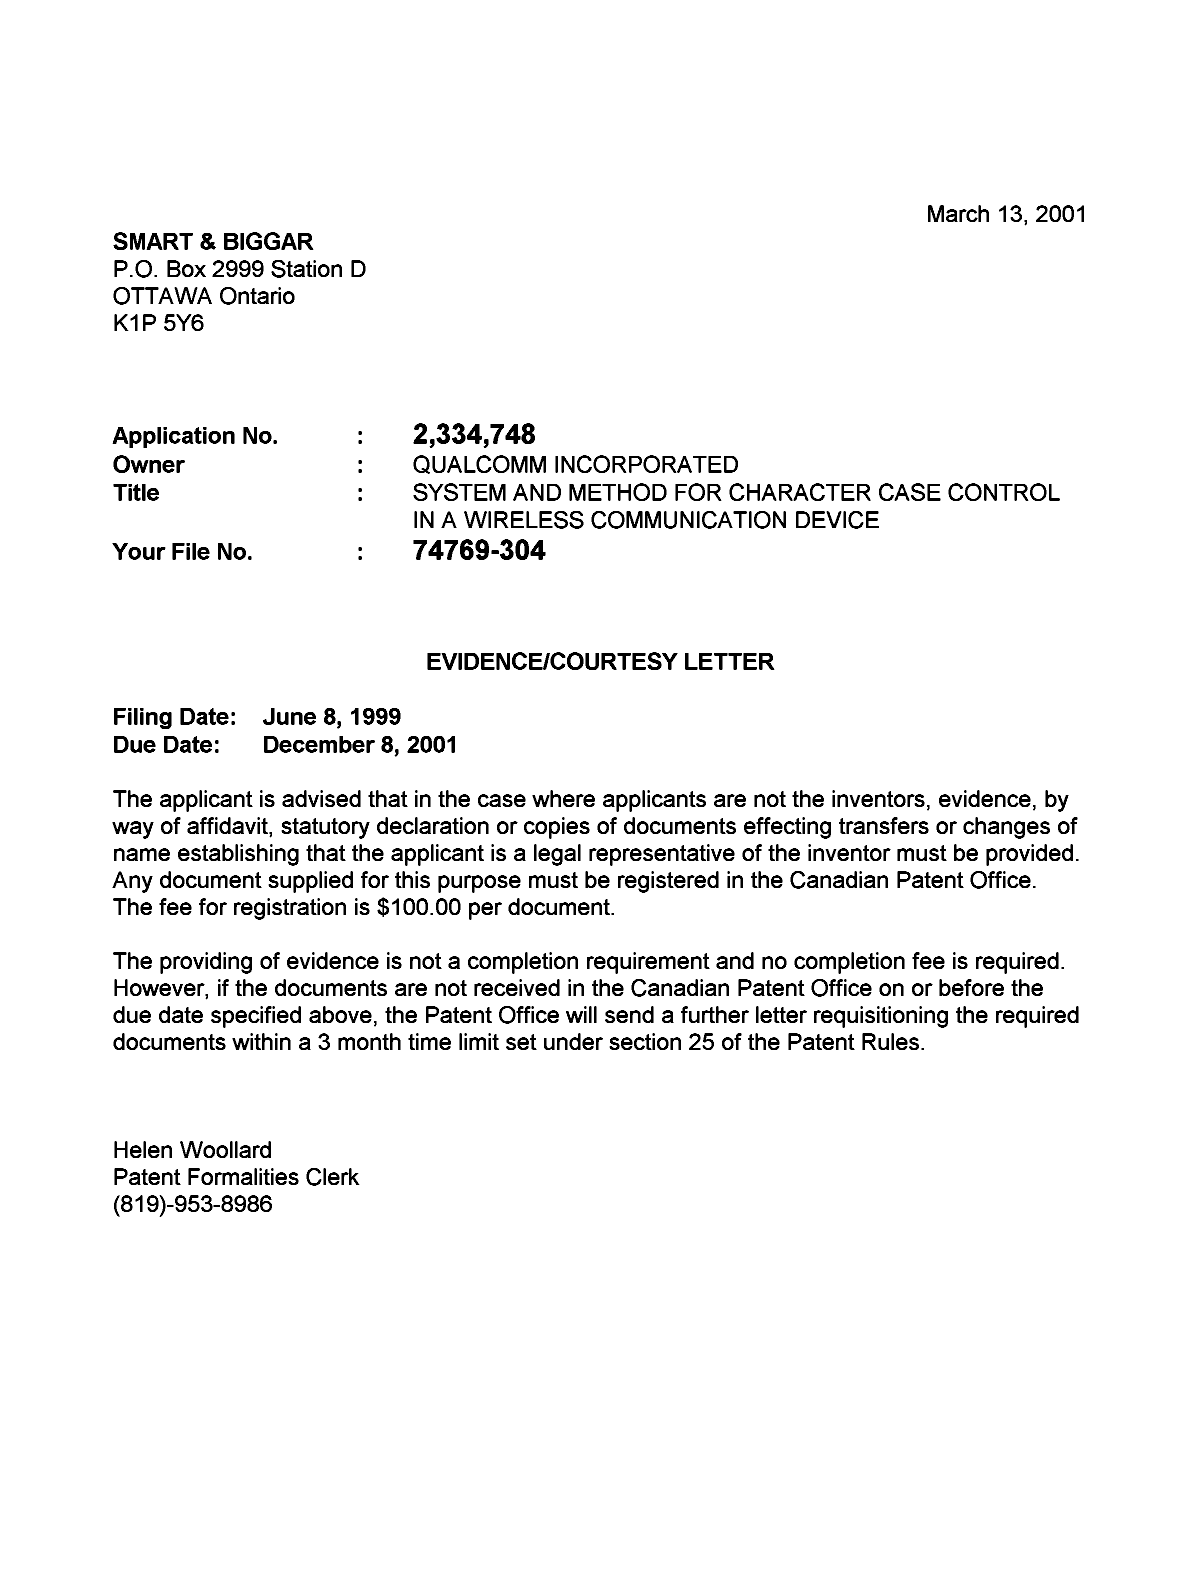 Canadian Patent Document 2334748. Correspondence 20010309. Image 1 of 1